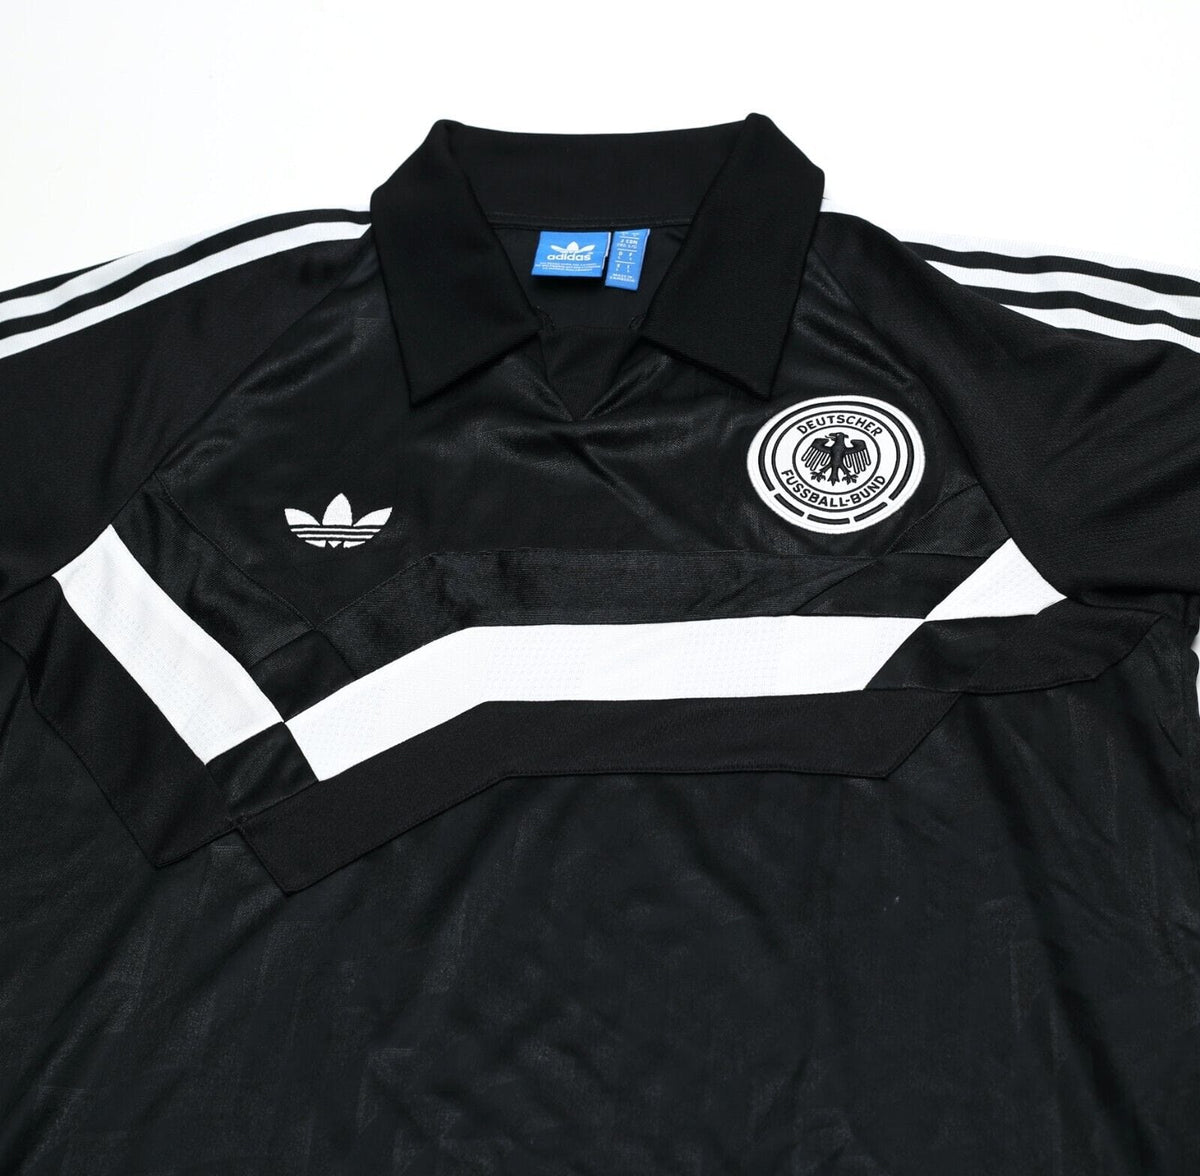 Adidas Originals vintage football shirt Germany 